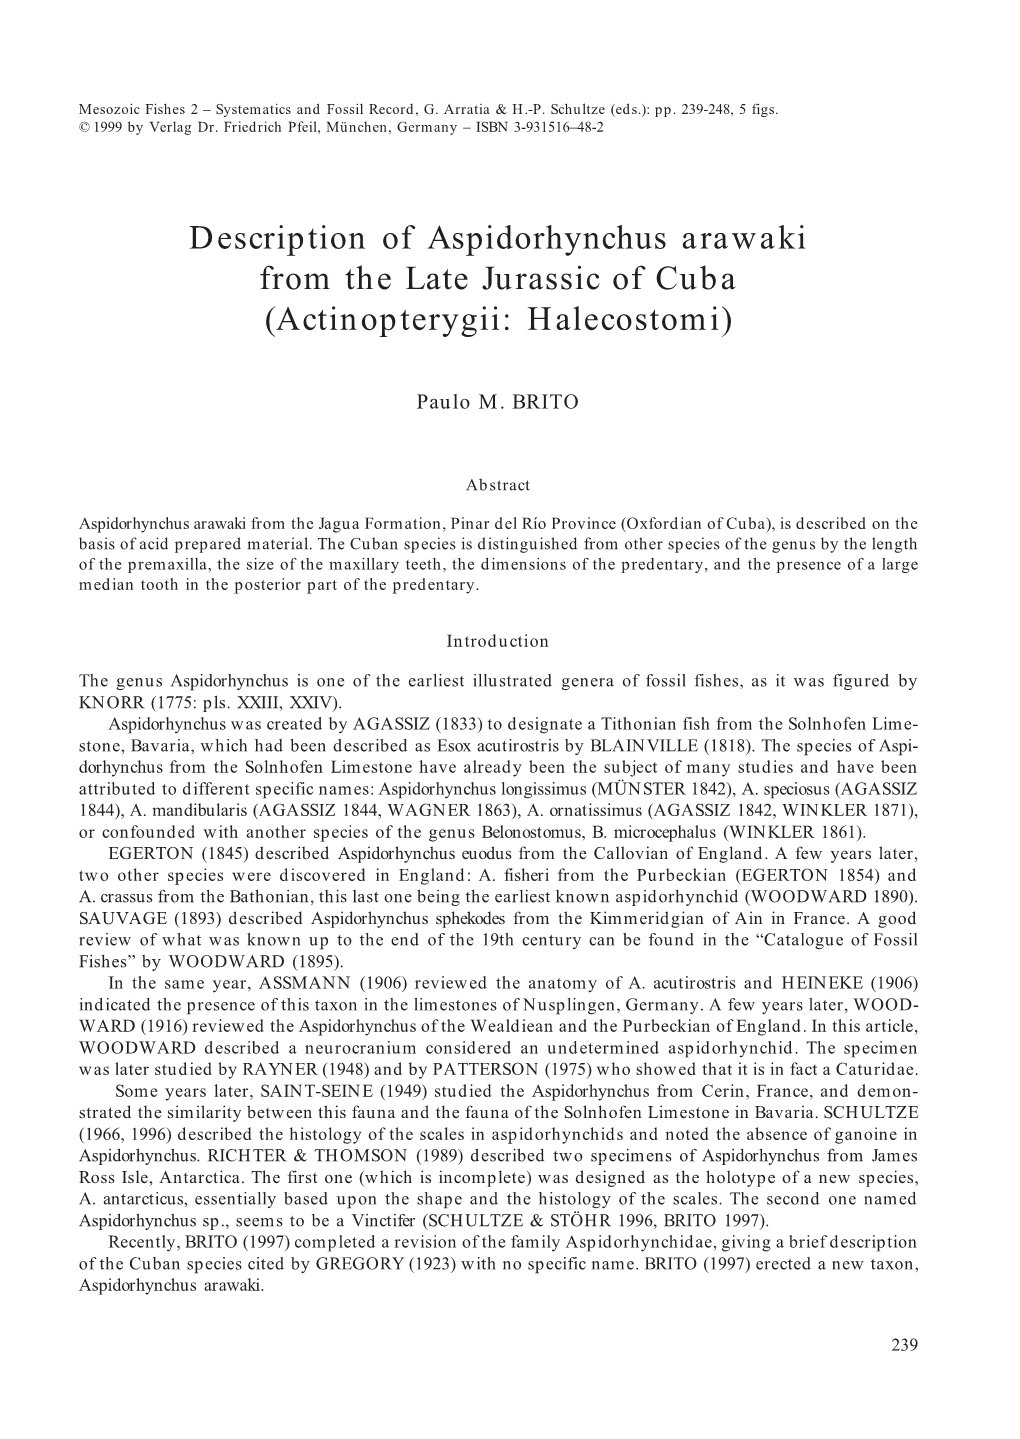 Description of Aspidorhynchus Arawaki from the Late Jurassic of Cuba (Actinopterygii: Halecostomi)